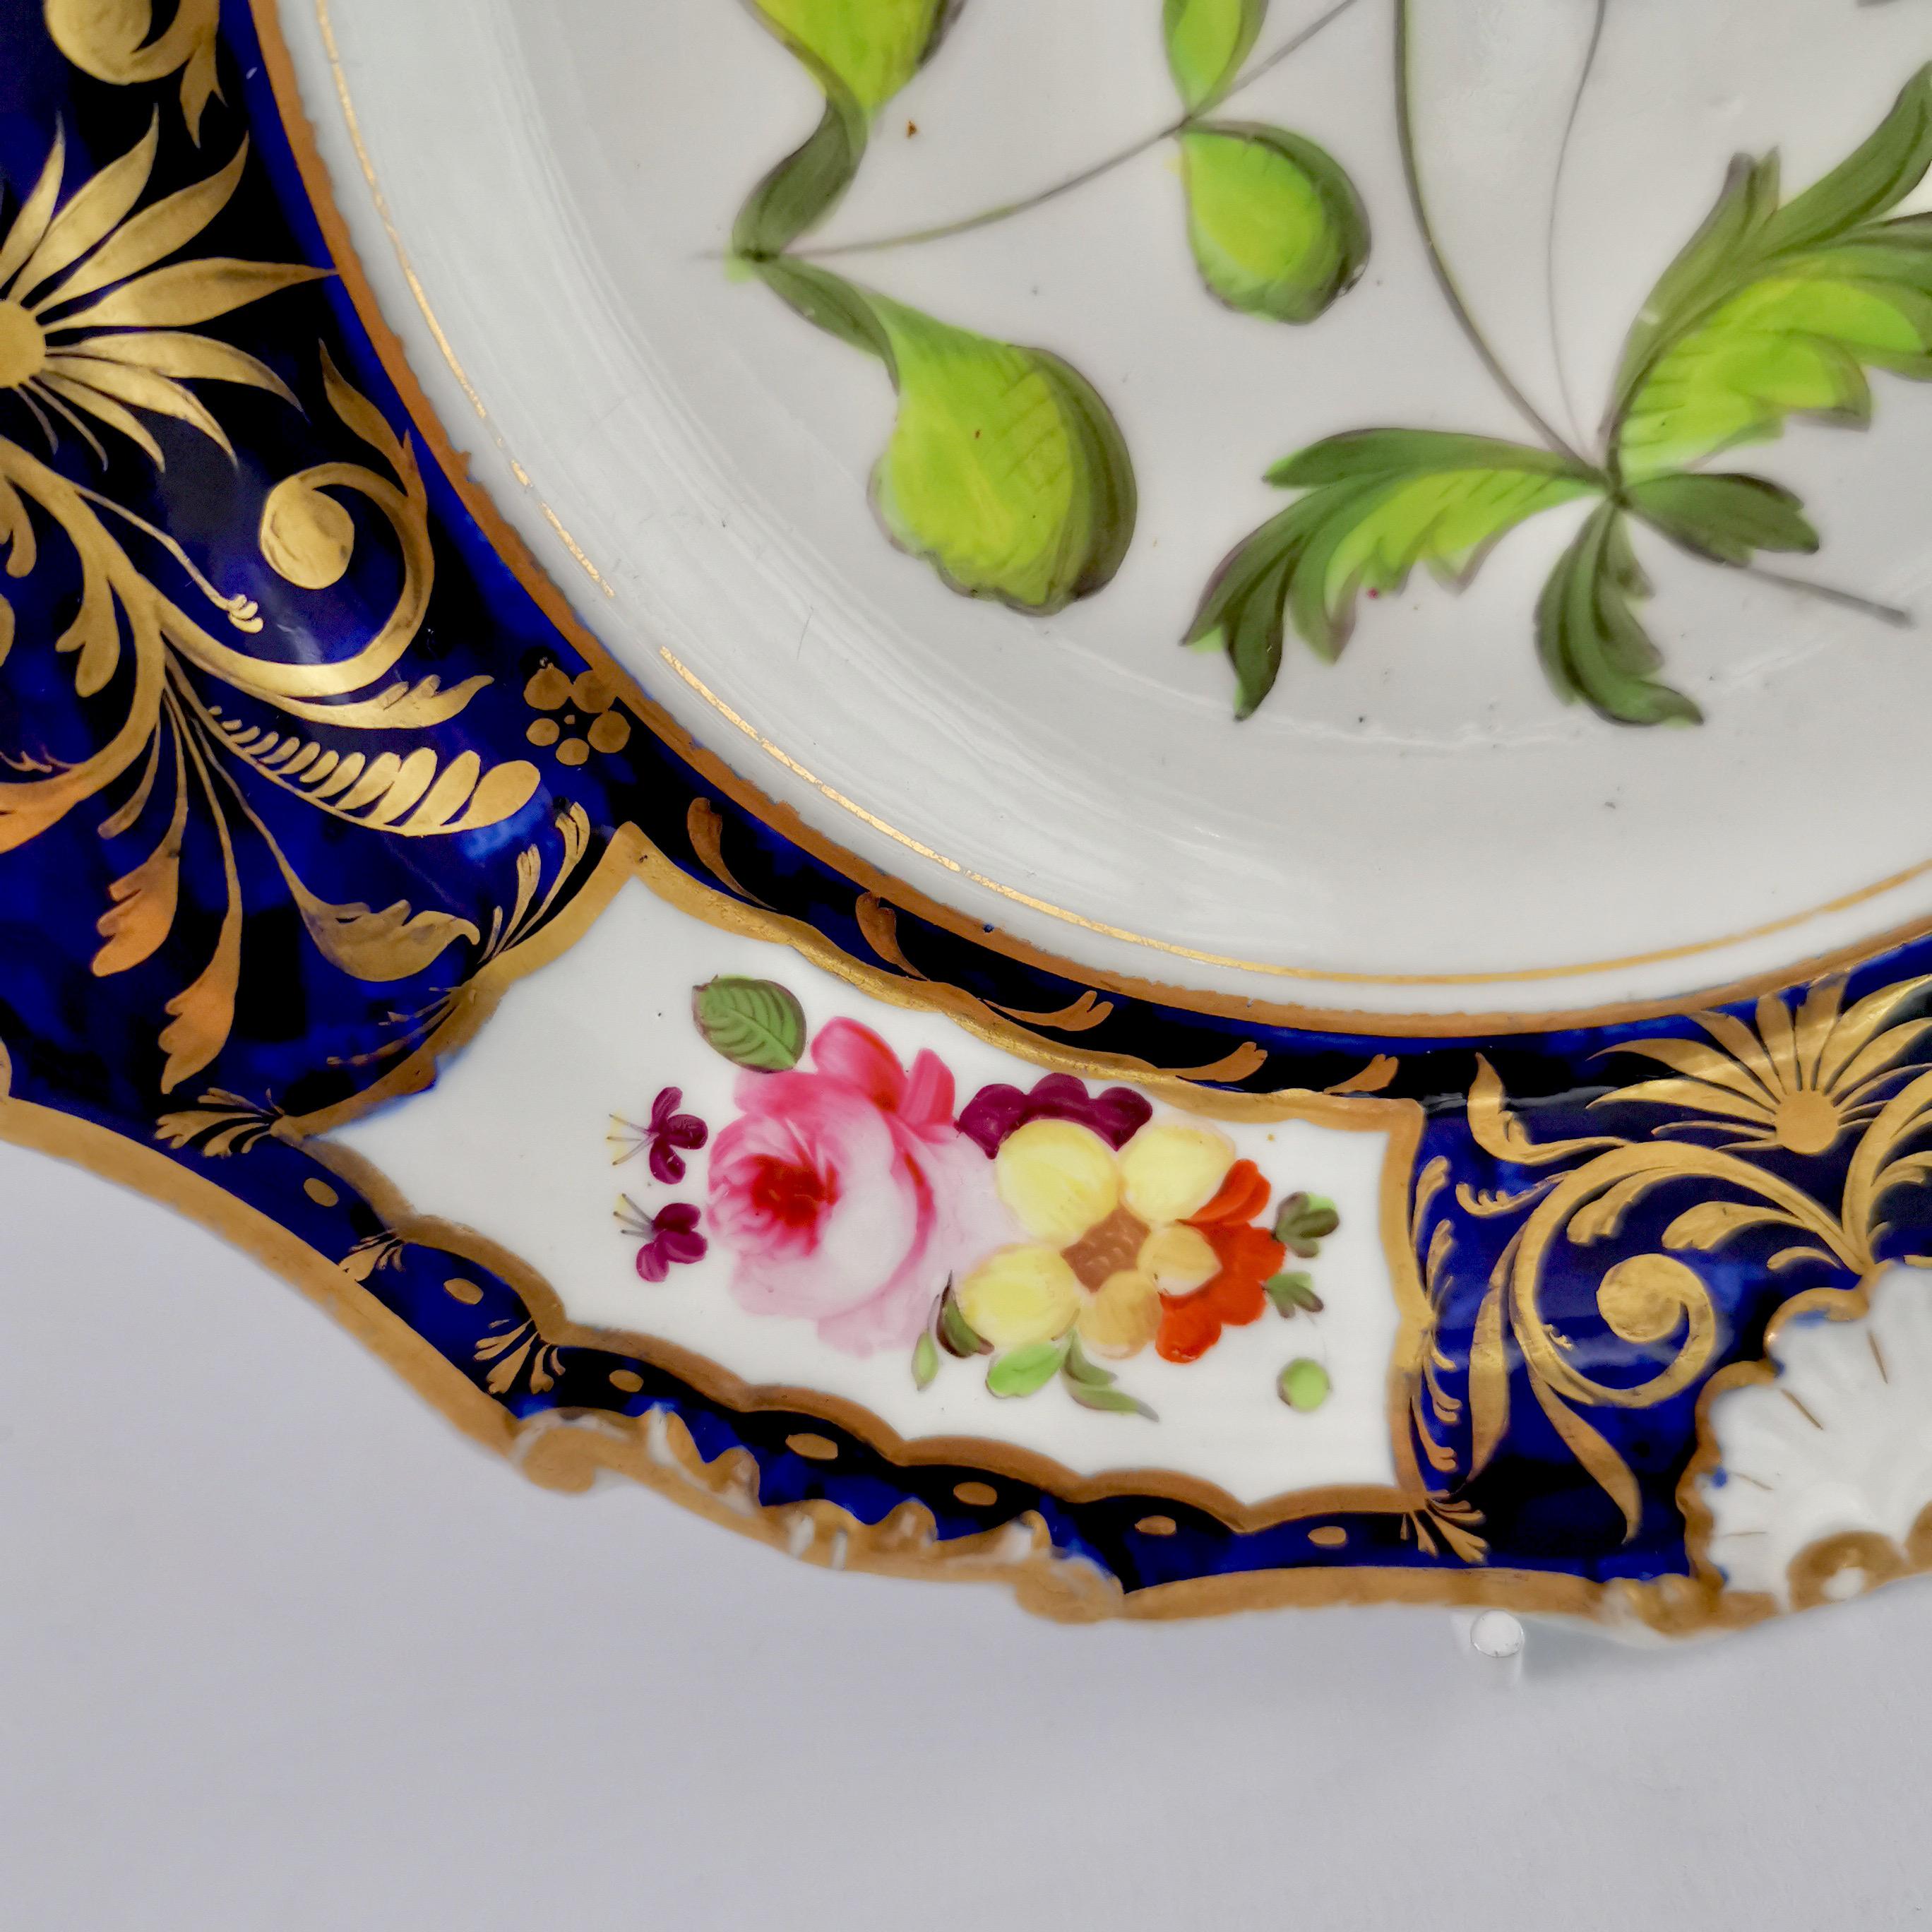 Machin Porcelain Plate, Cobalt Blue, Gilt and Flowers, Regency, circa 1820 6